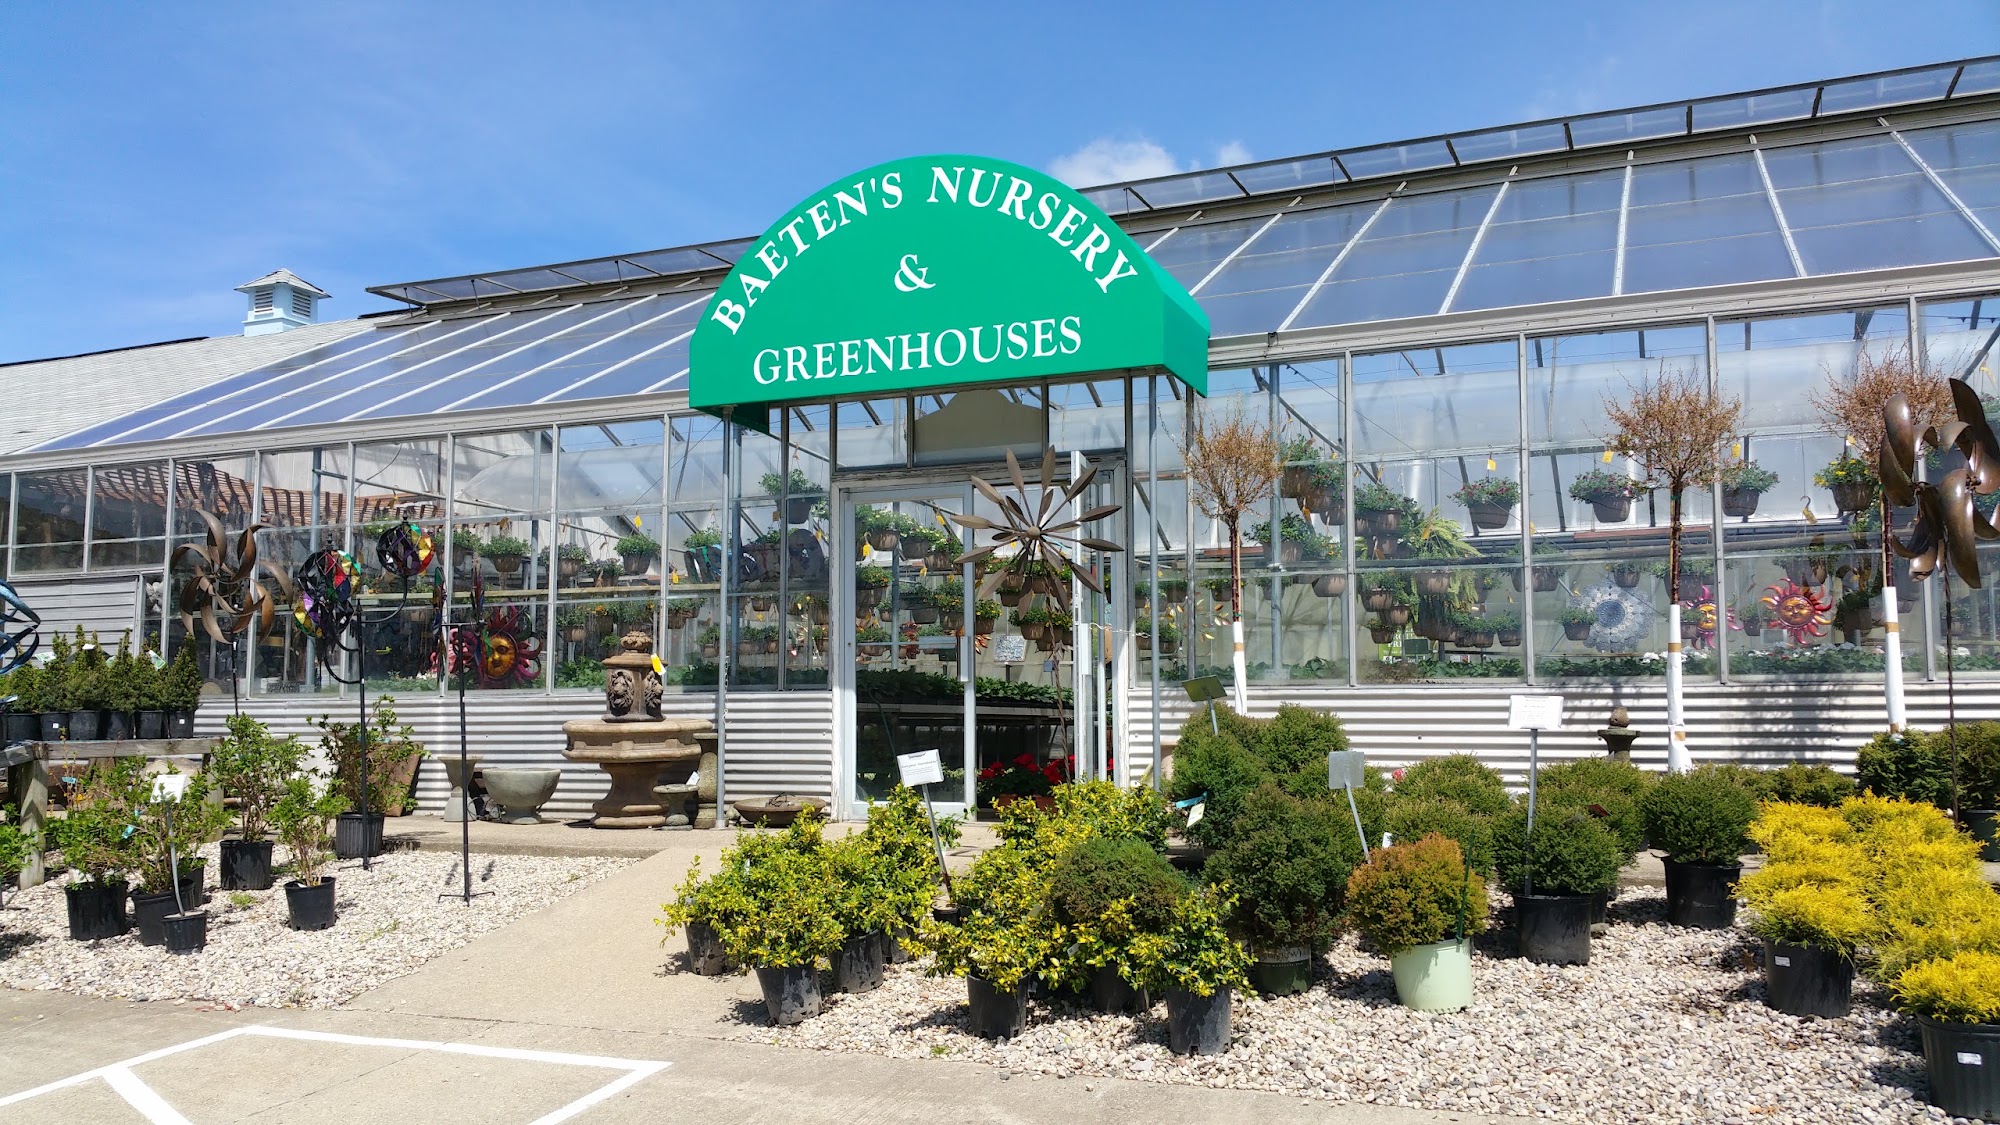 Baeten's Nursery & Greenhouses